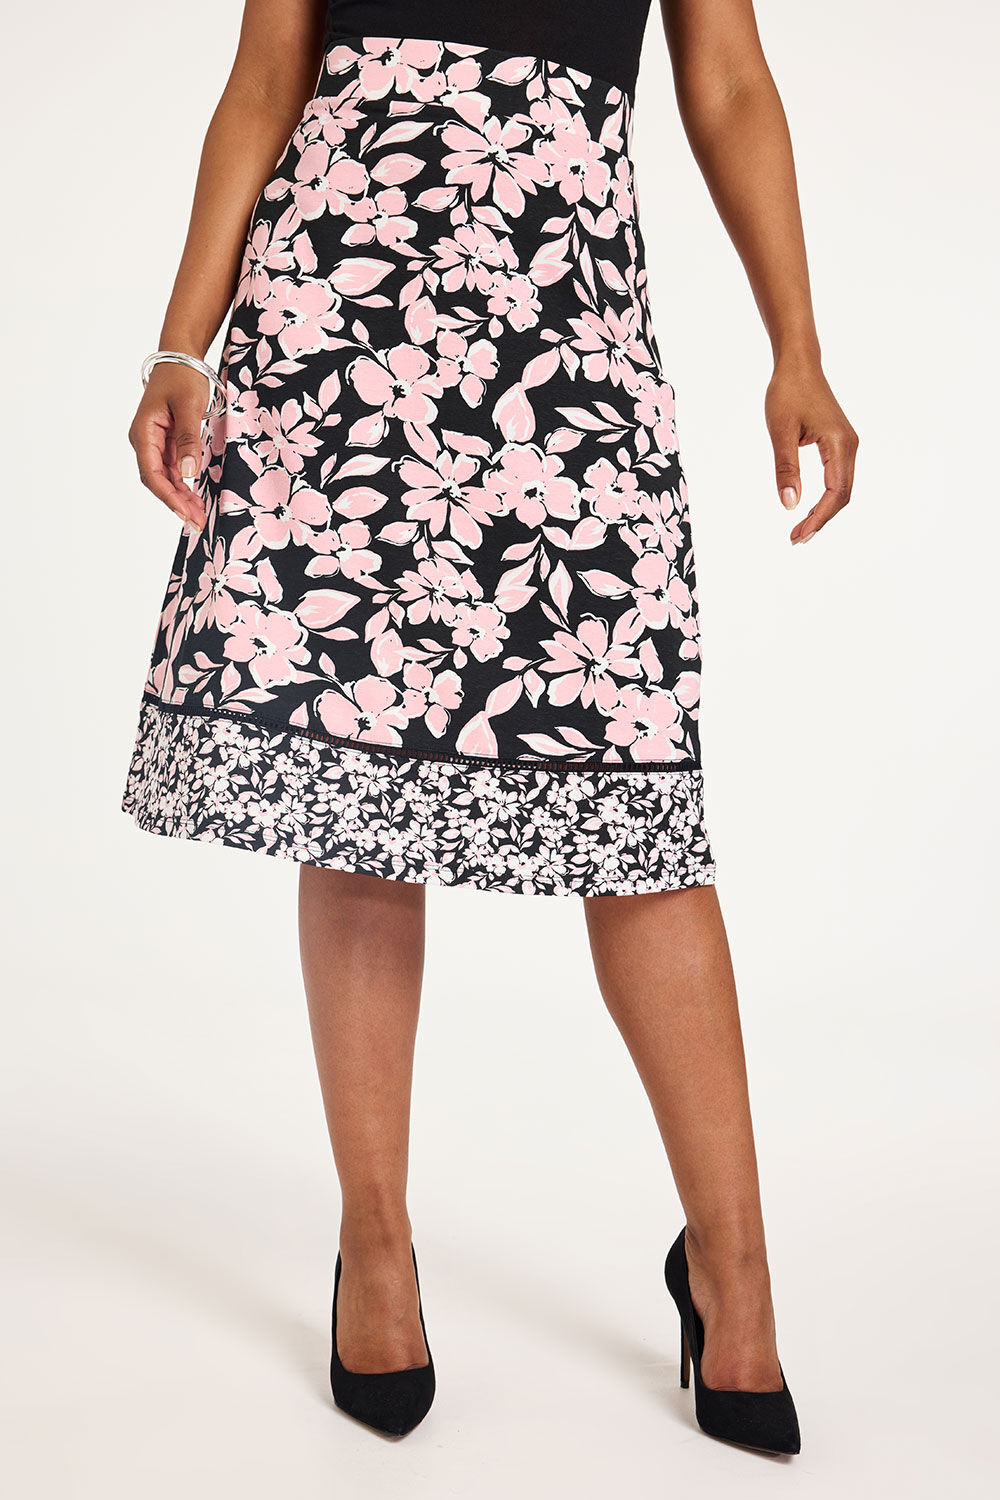 Bonmarche Black Floral Border Print A-Line Jersey Skirt, Size: 24